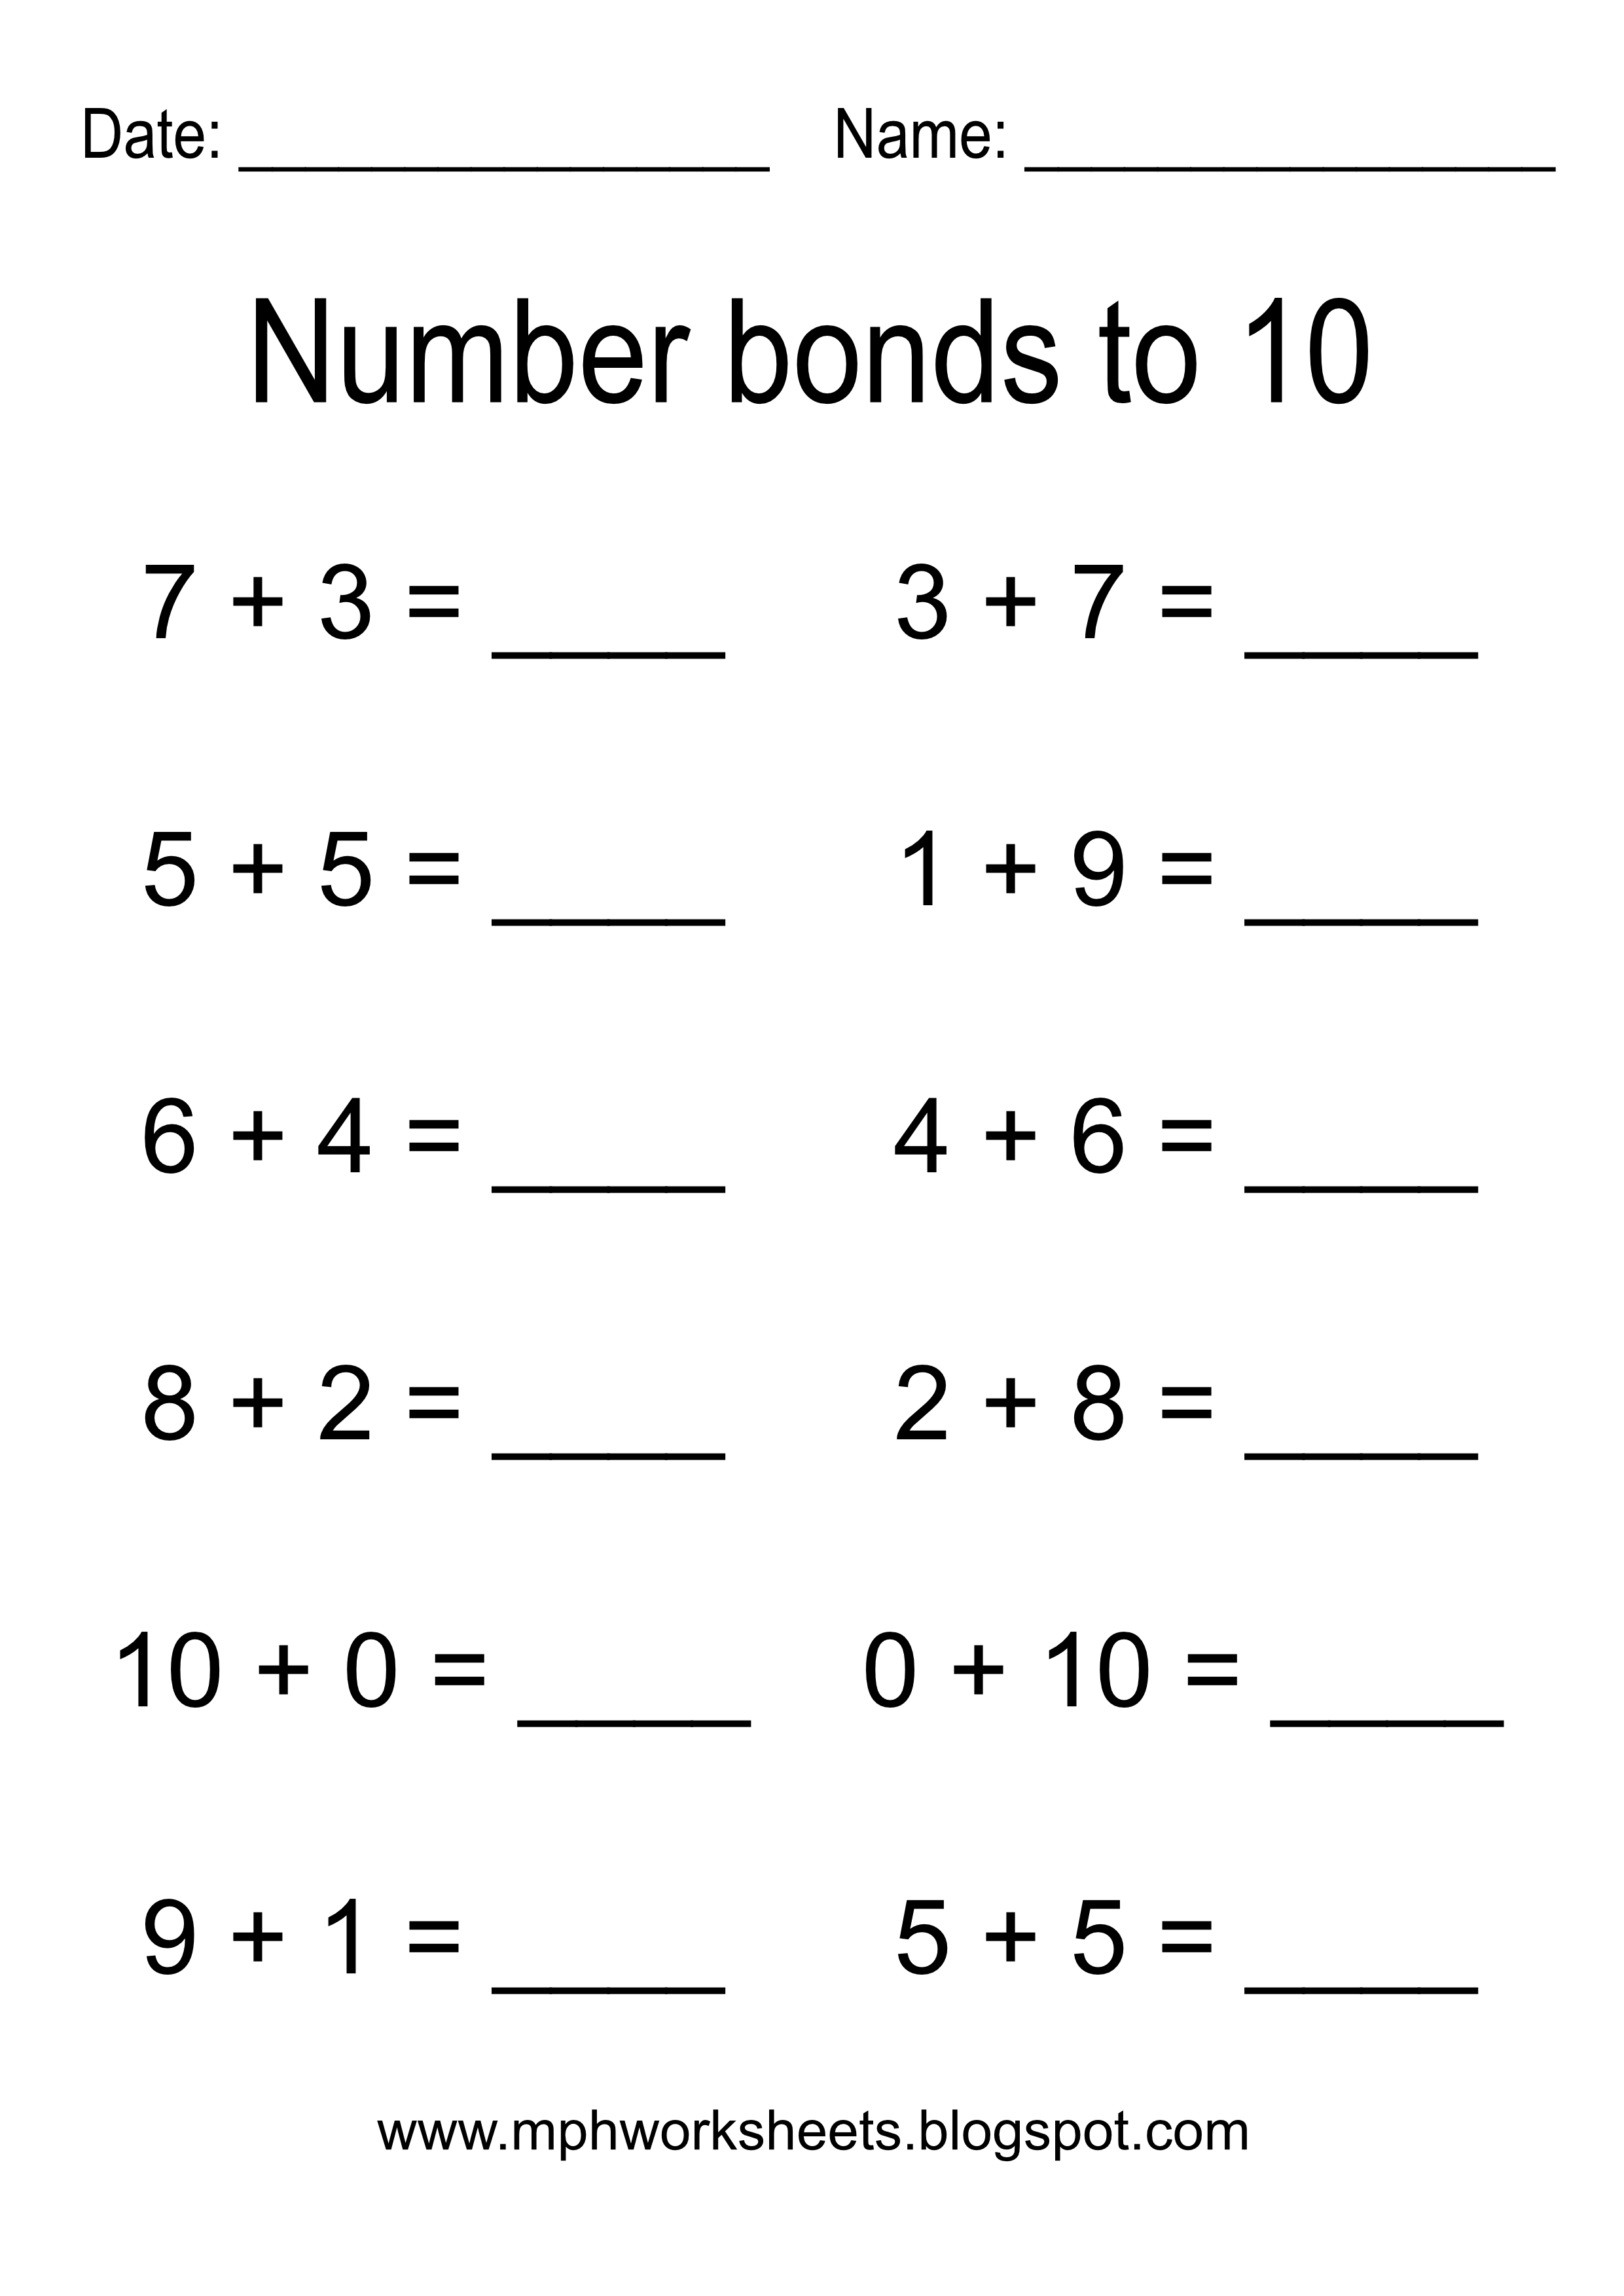 number-bonds-to-10